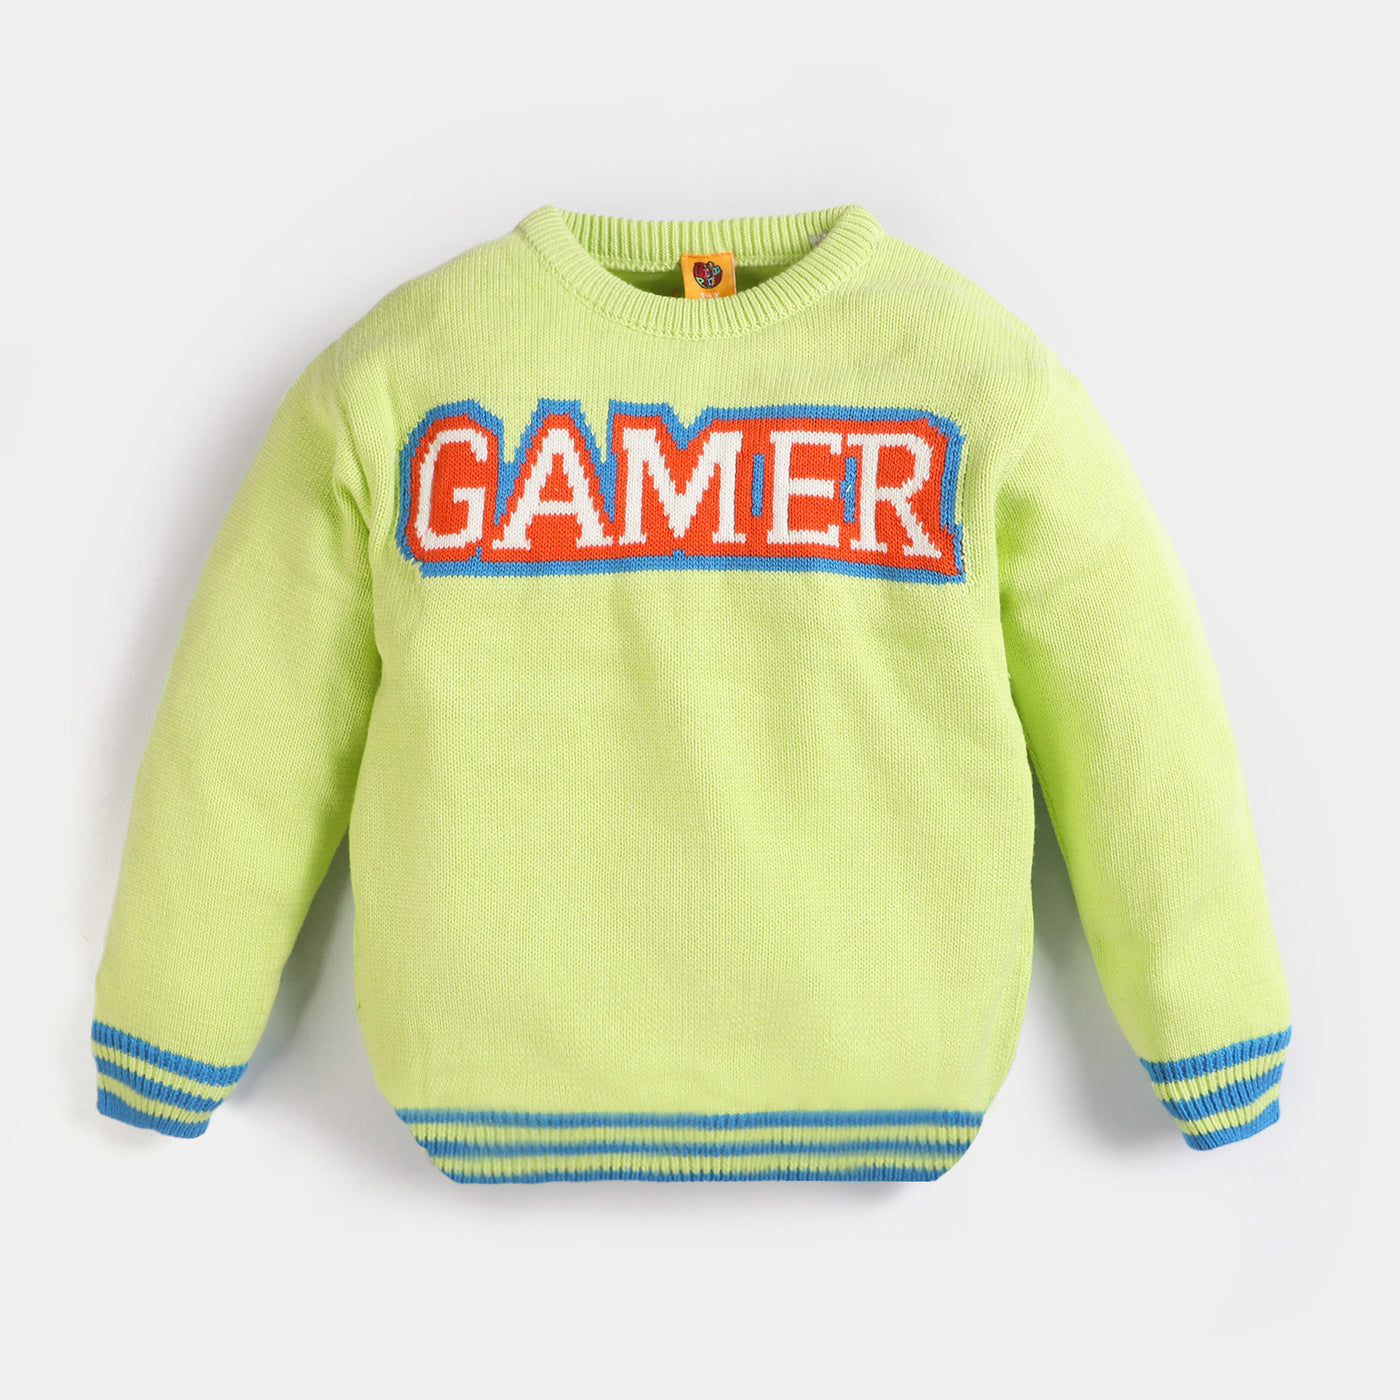 Boys Cotton Full Sleeves Sweater -Neon Green